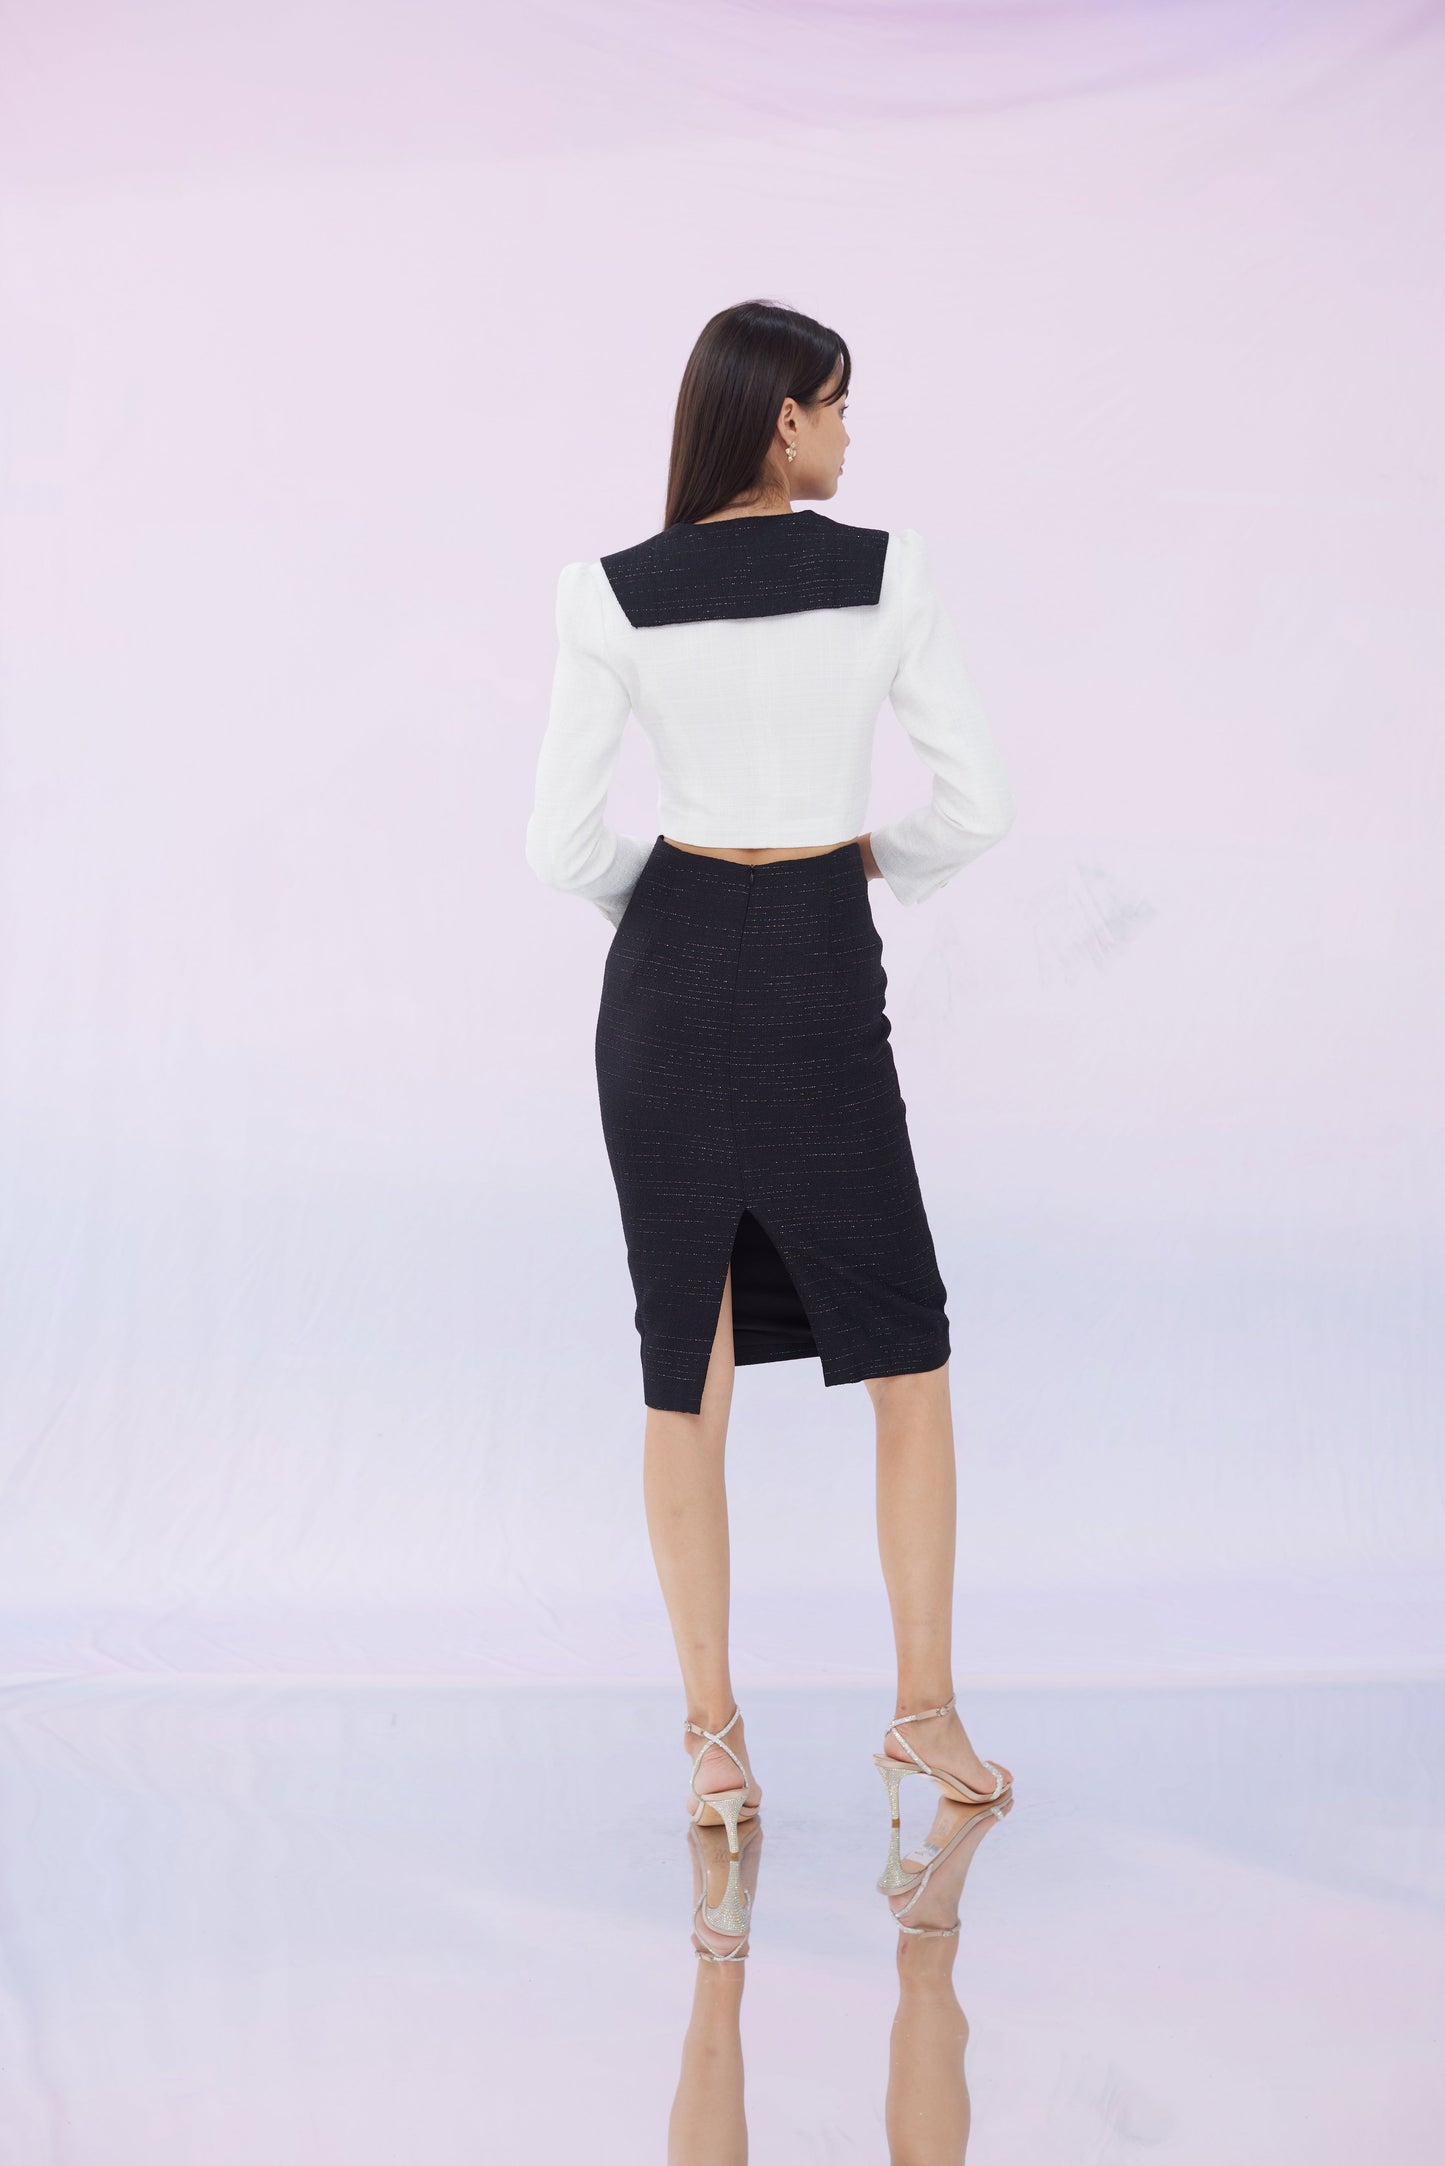 Giavanna Black Skirt